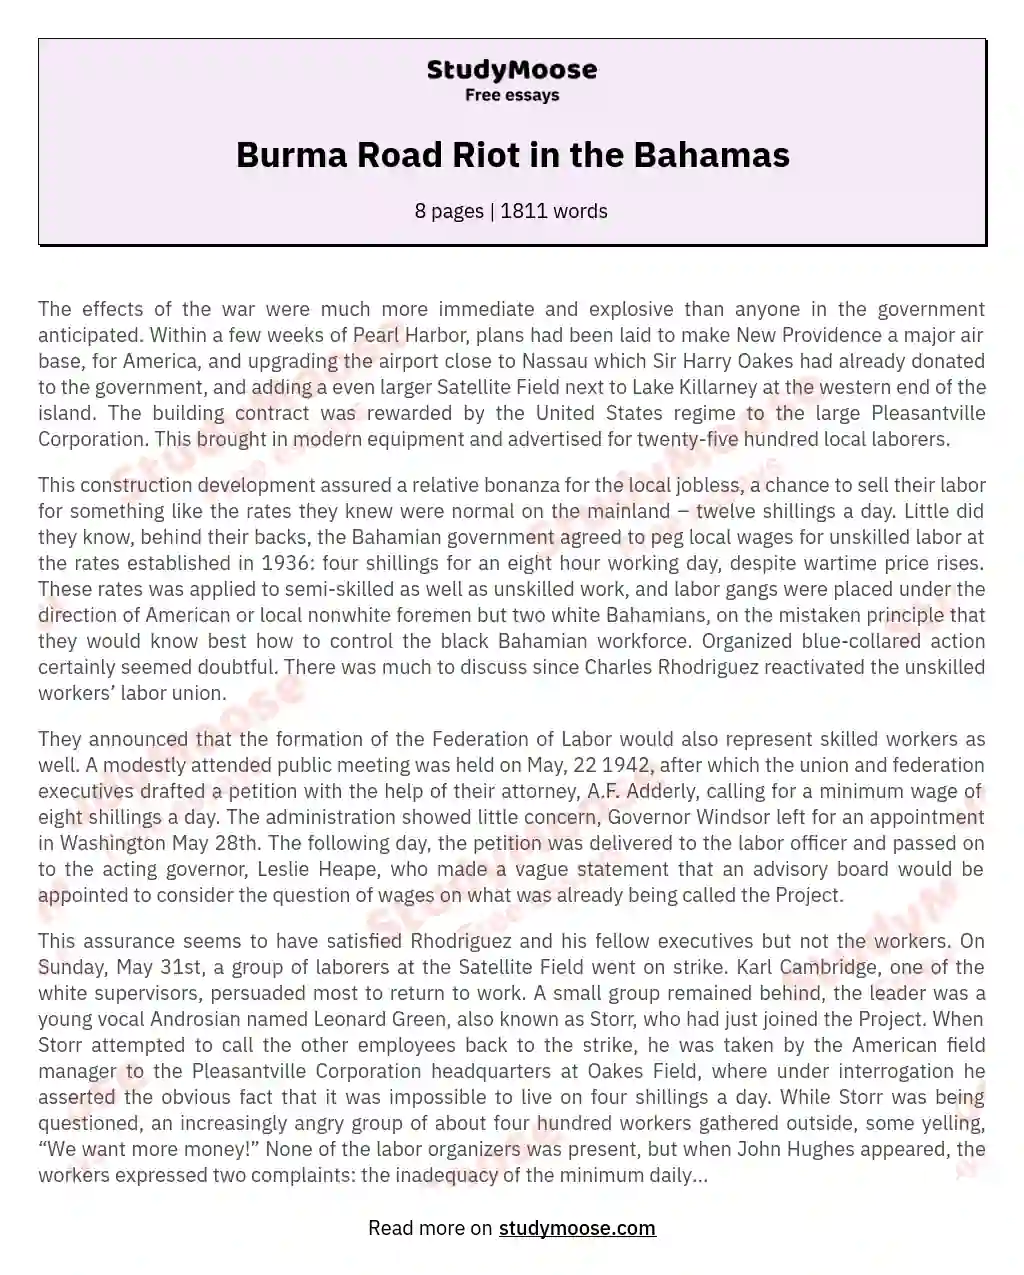 Burma Road Riot in the Bahamas essay